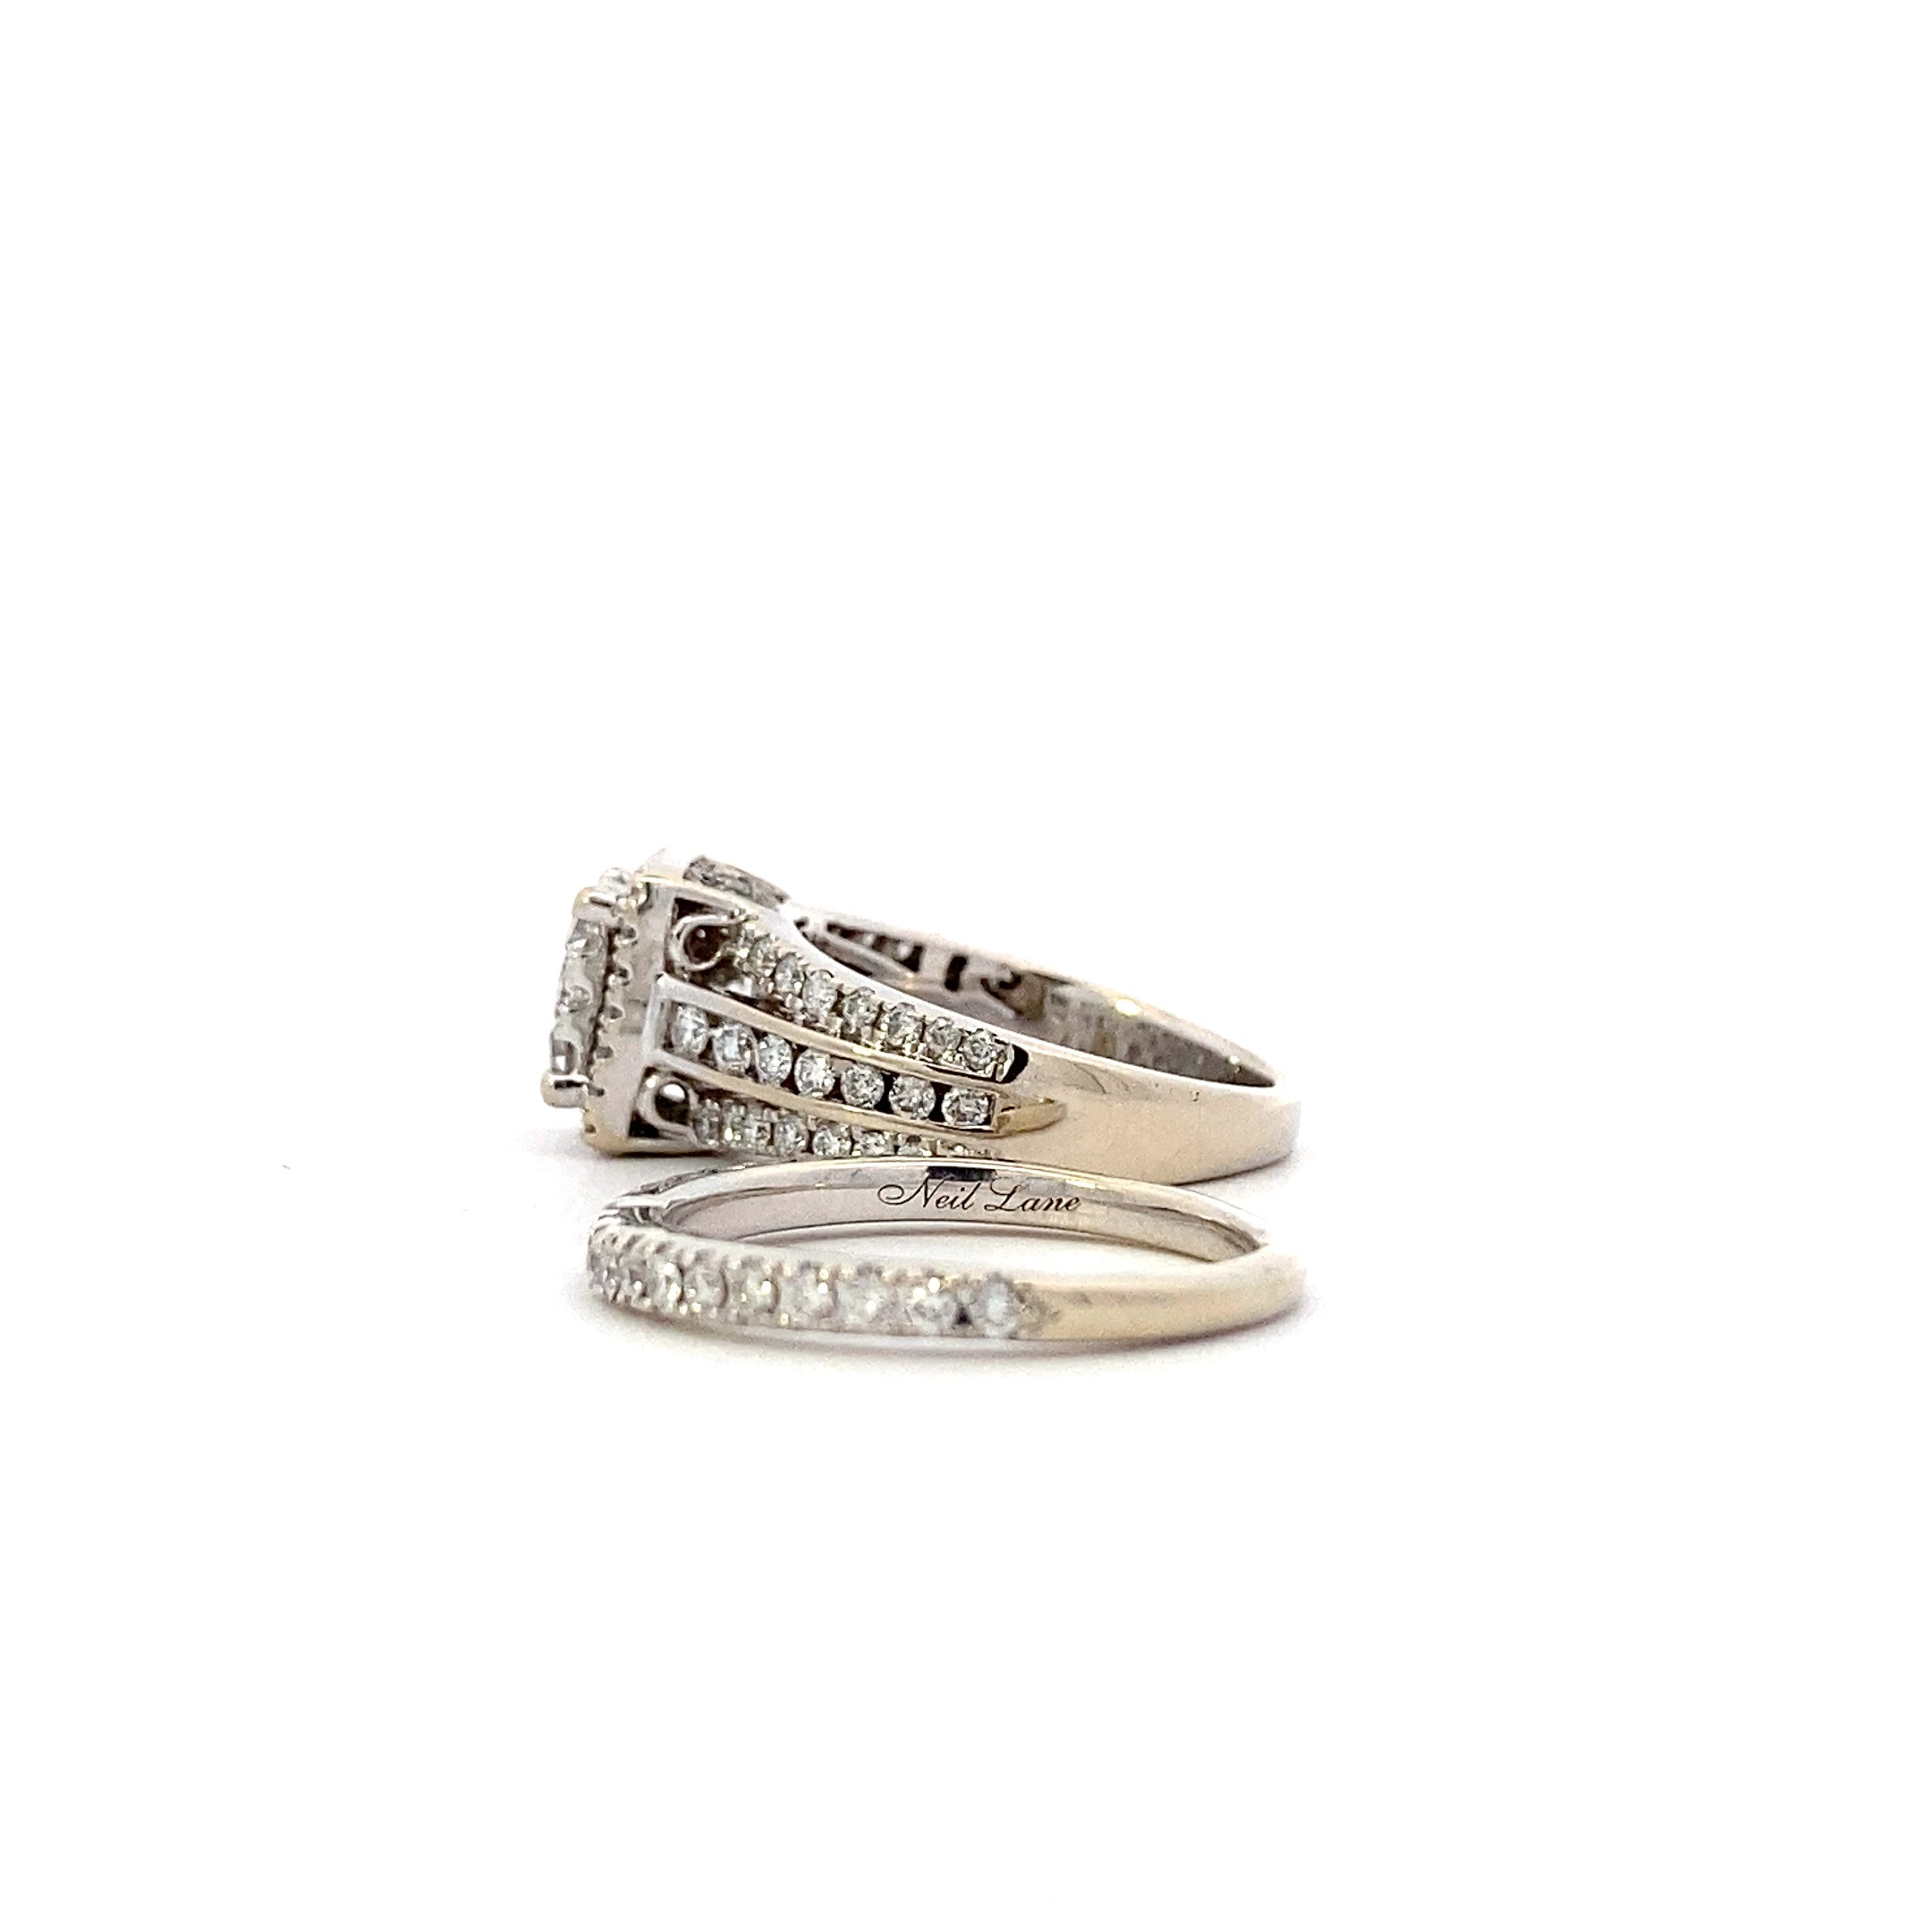 14K White Gold Diamond Engagement & Wedding Ring Set - 1.64ct